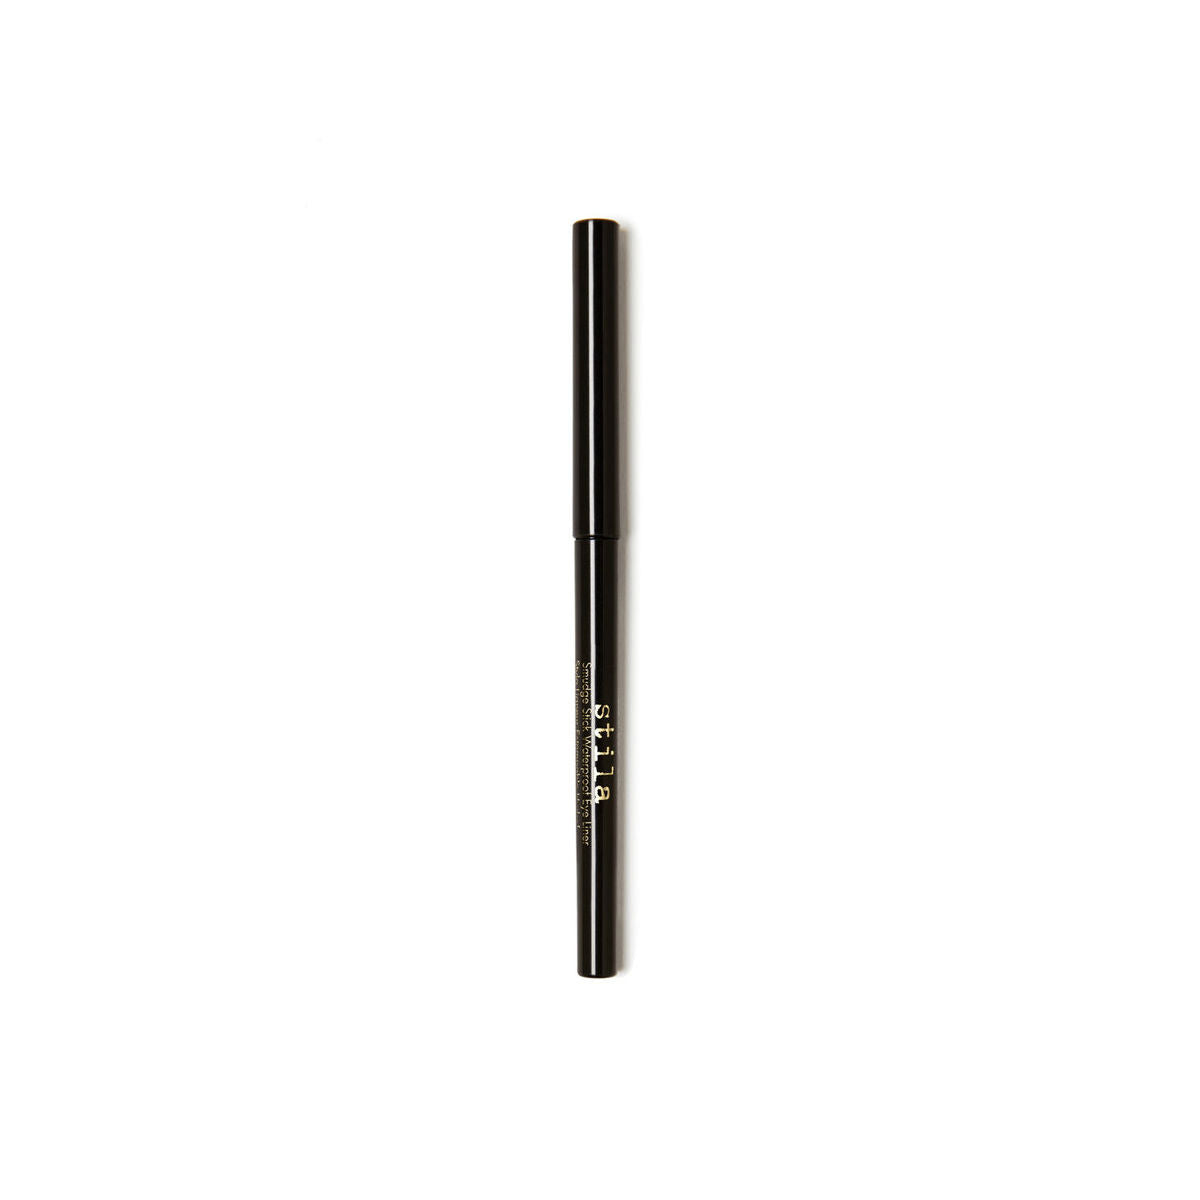 Smudge Stick Waterproof Eye Liner - Long-lasting staying power